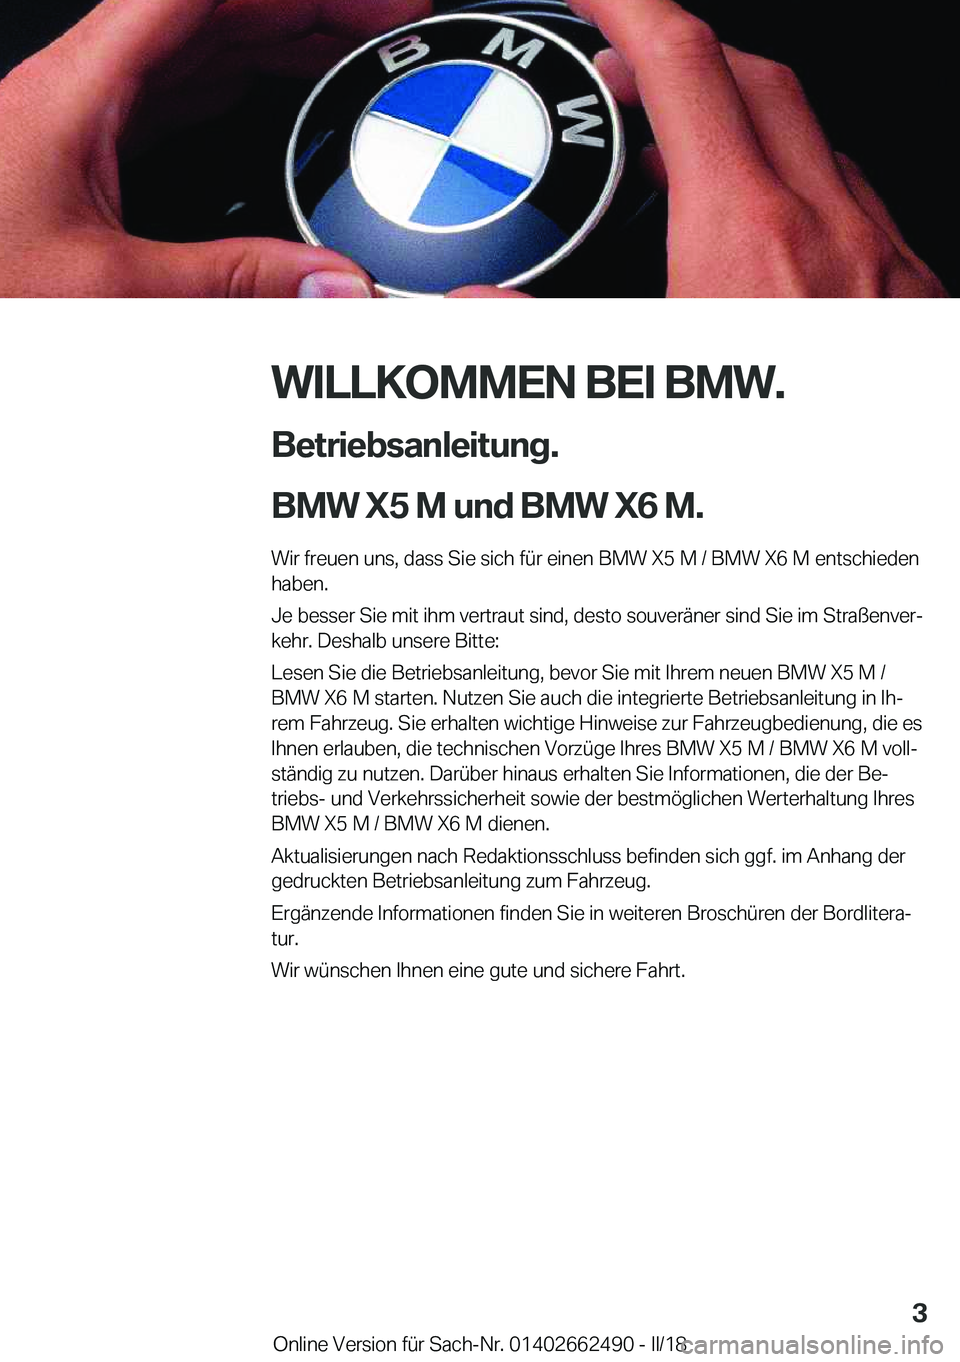 BMW X5 M 2018  Betriebsanleitungen (in German) �W�I�L�L�K�O�M�M�E�N��B�E�I��B�M�W�.�B�e�t�r�i�e�b�s�a�n�l�e�i�t�u�n�g�.
�B�M�W��X�5��M��u�n�d��B�M�W��X�6��M�. �W�i�r� �f�r�e�u�e�n� �u�n�s�,� �d�a�s�s� �S�i�e� �s�i�c�h� �f�